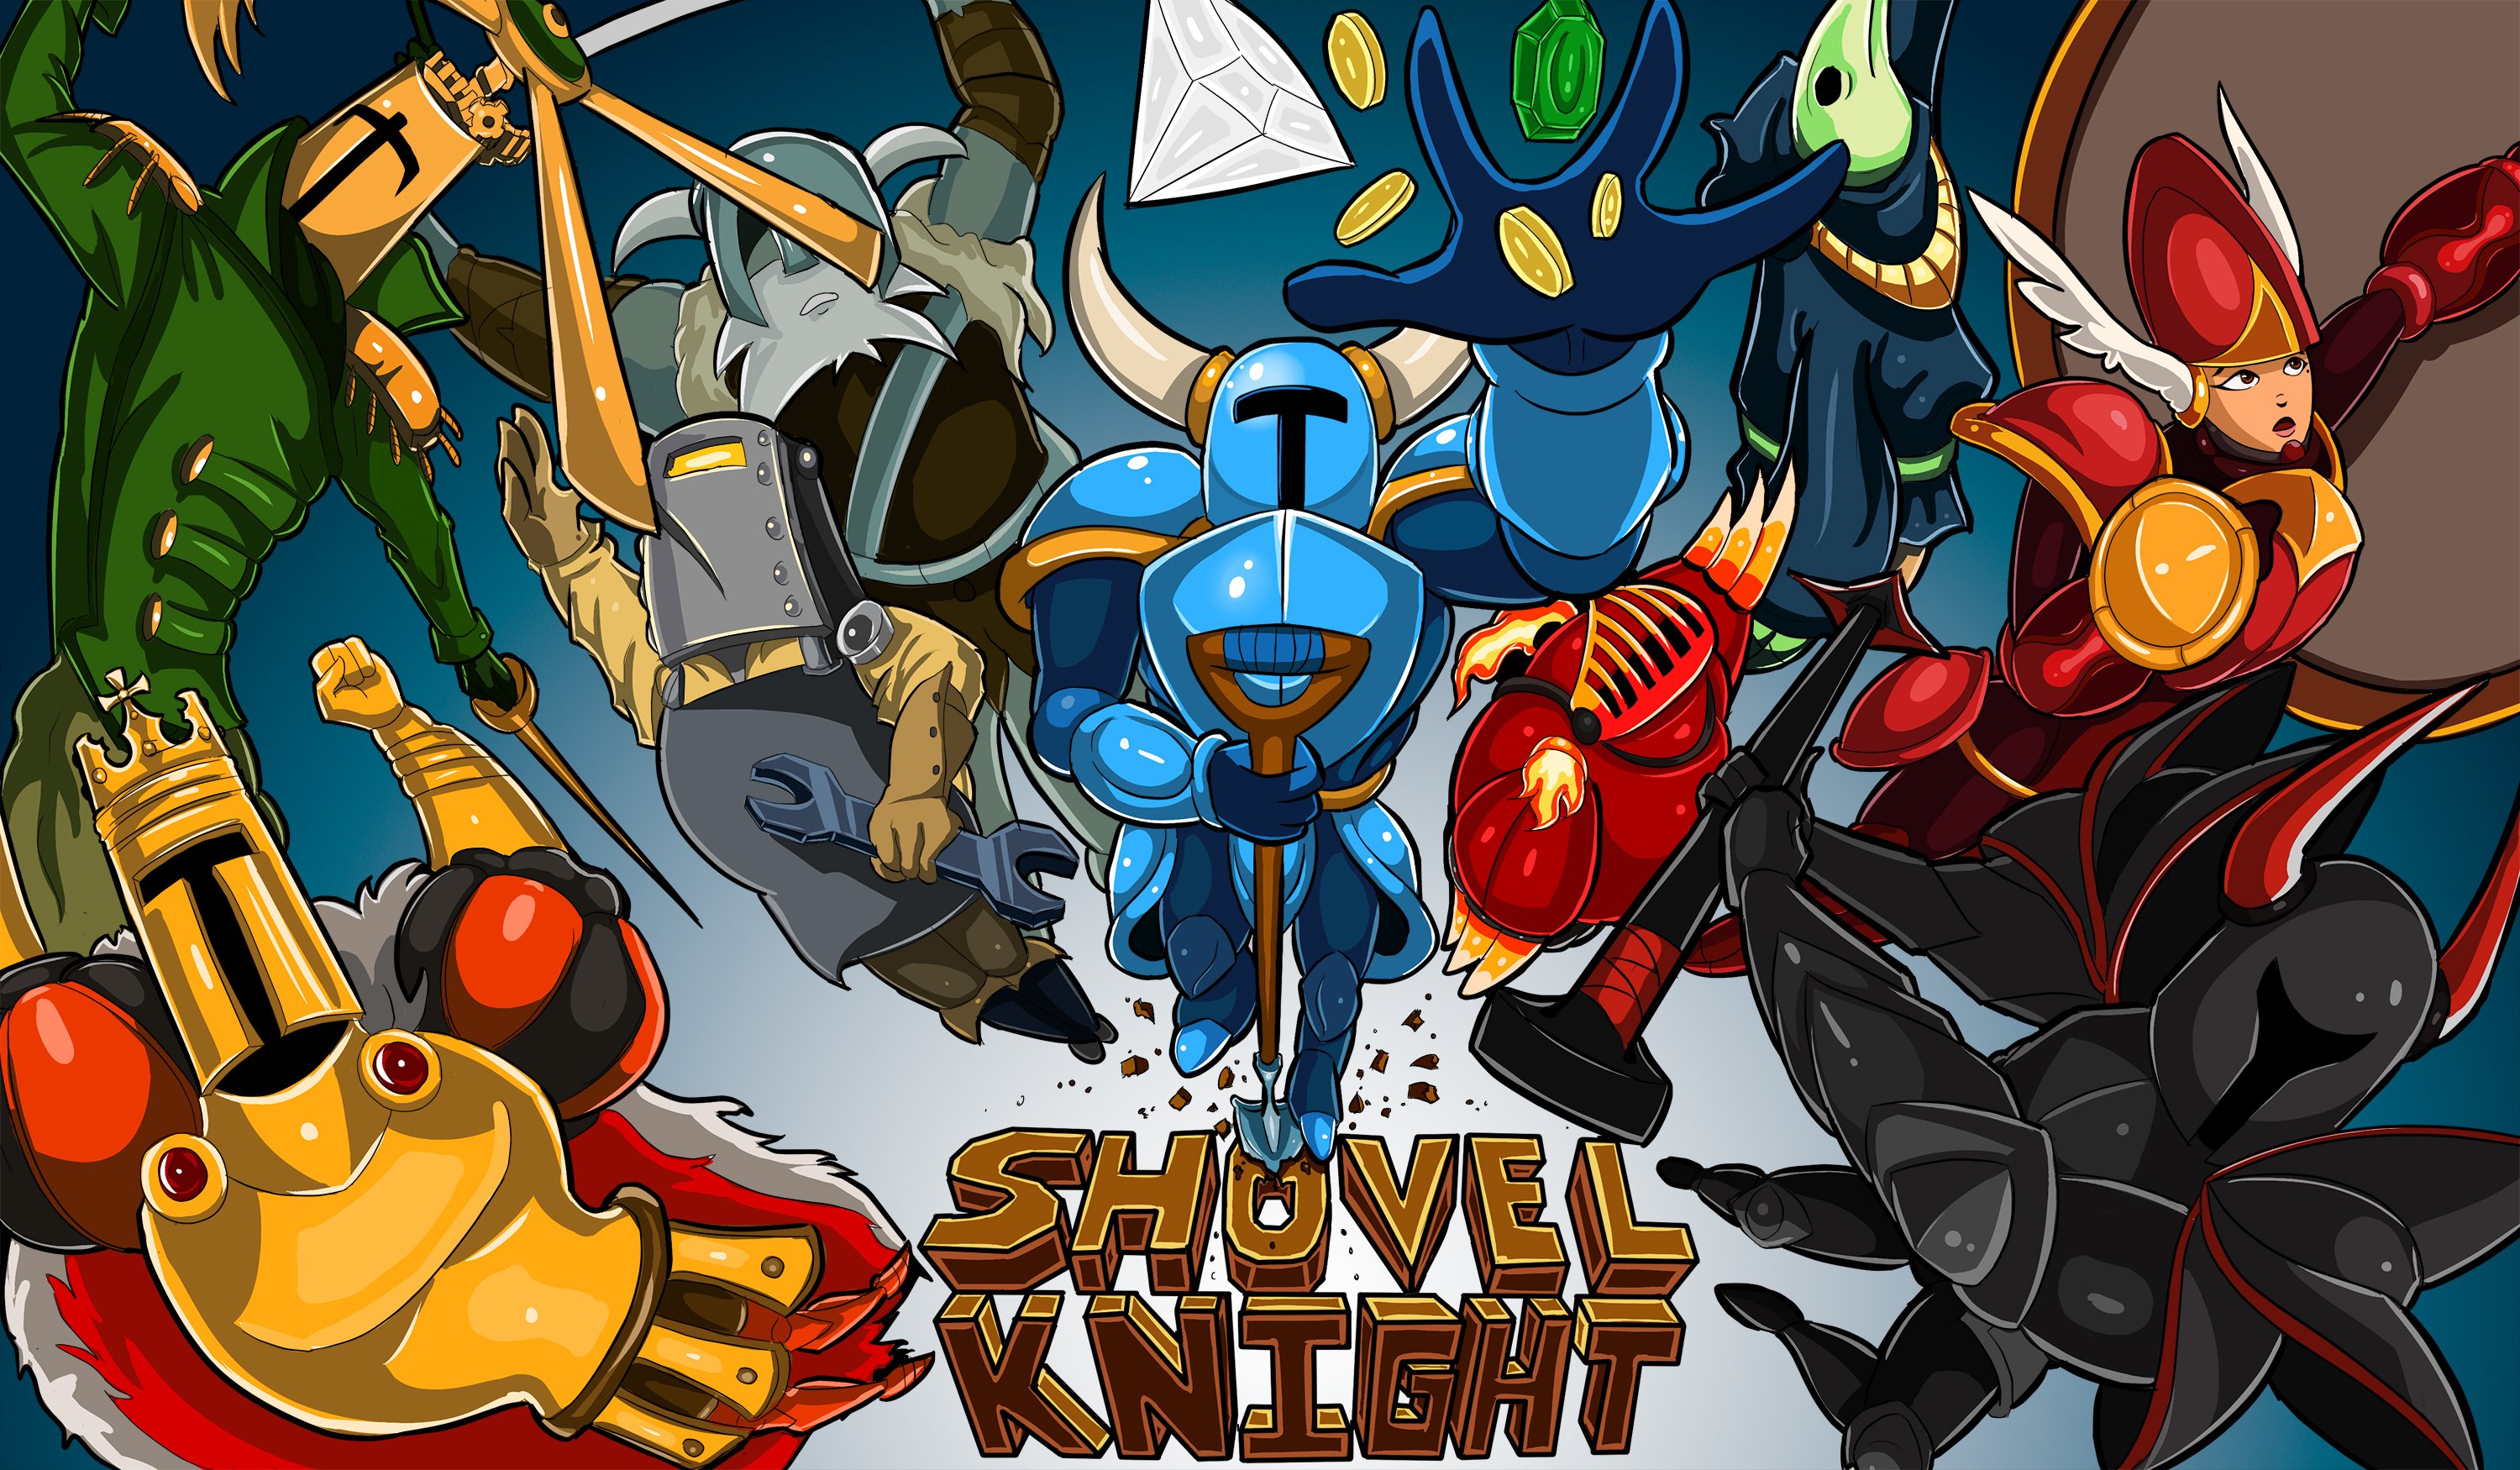 Shovel Knight Action Adventure Fighting Warrior Scrolling Platform